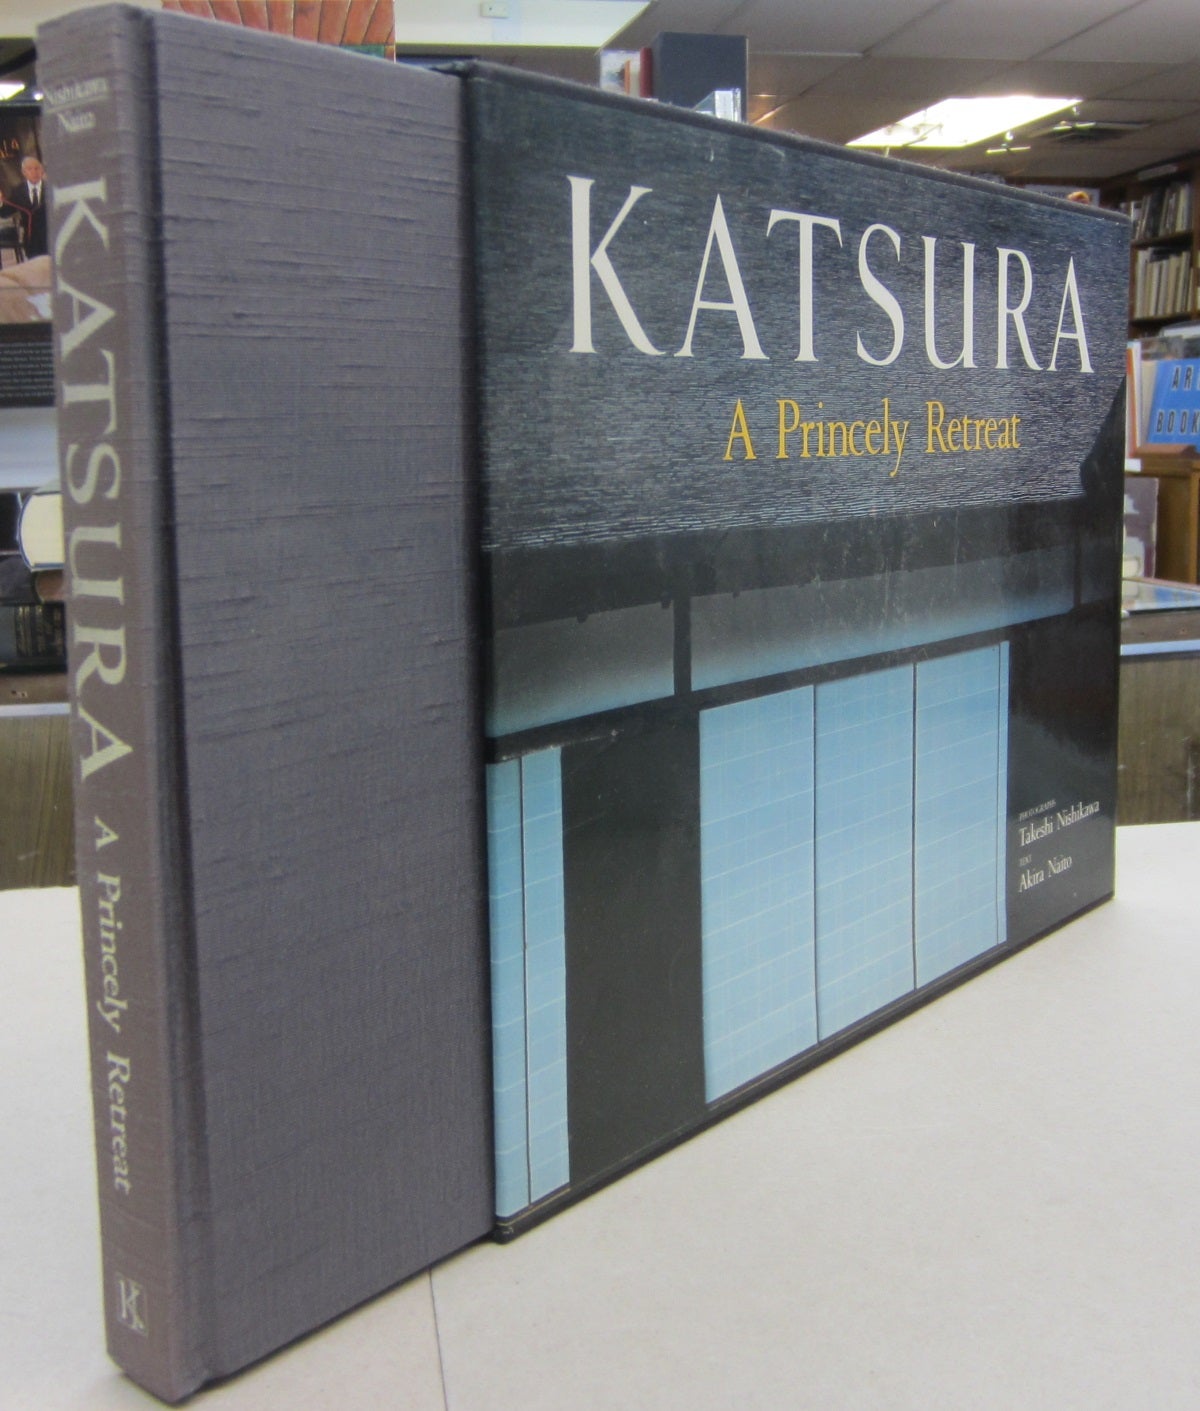 Katsura: A Princely Retreat by Akira Naito, Takeshi Nishikawa, Charles S.  Terry, text on Midway Book Store